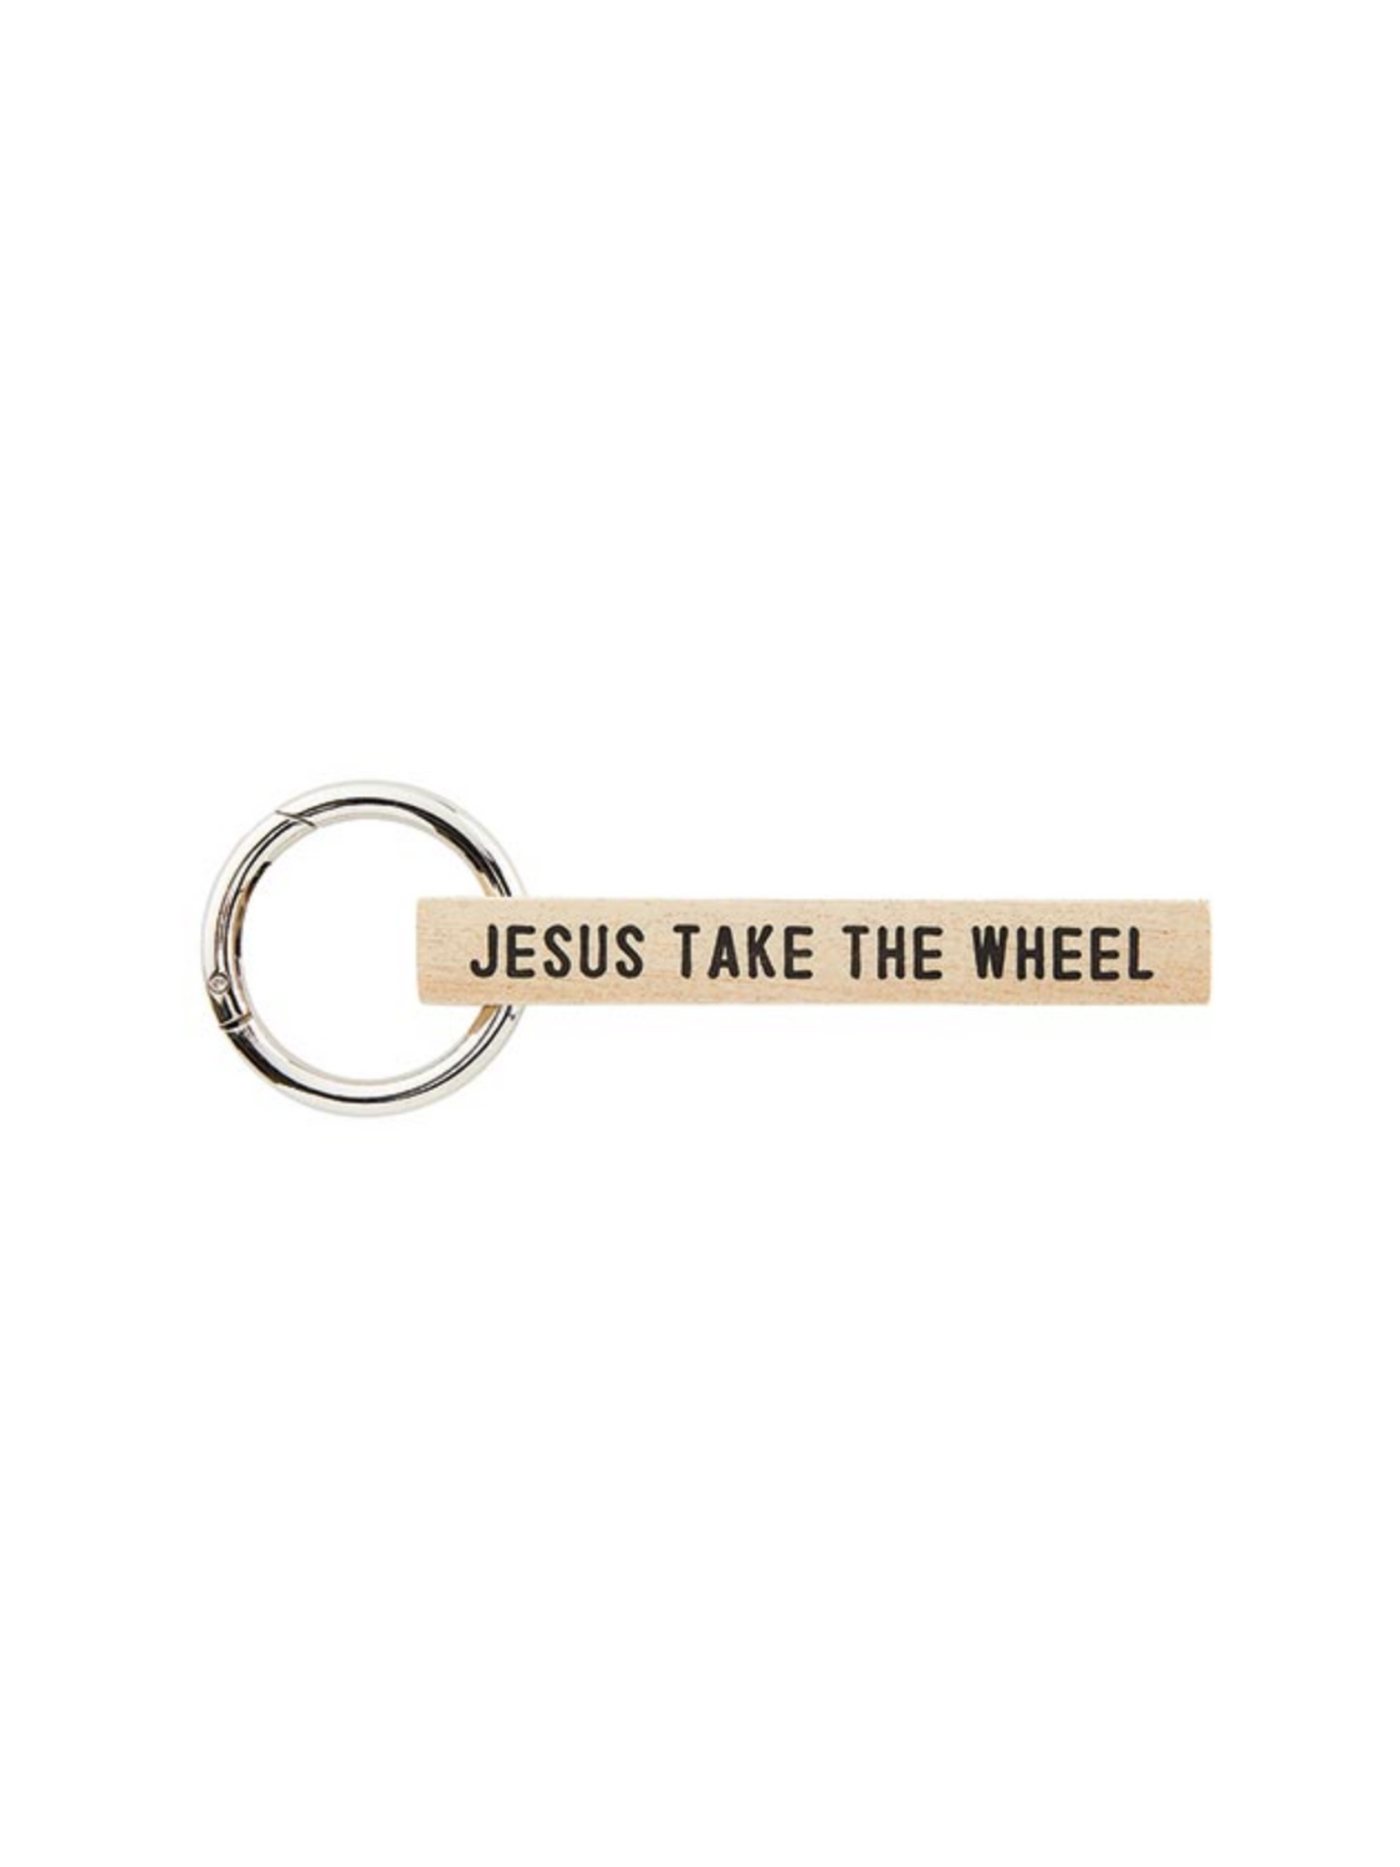 Jesus Take the Wheel Wooden Key Chain